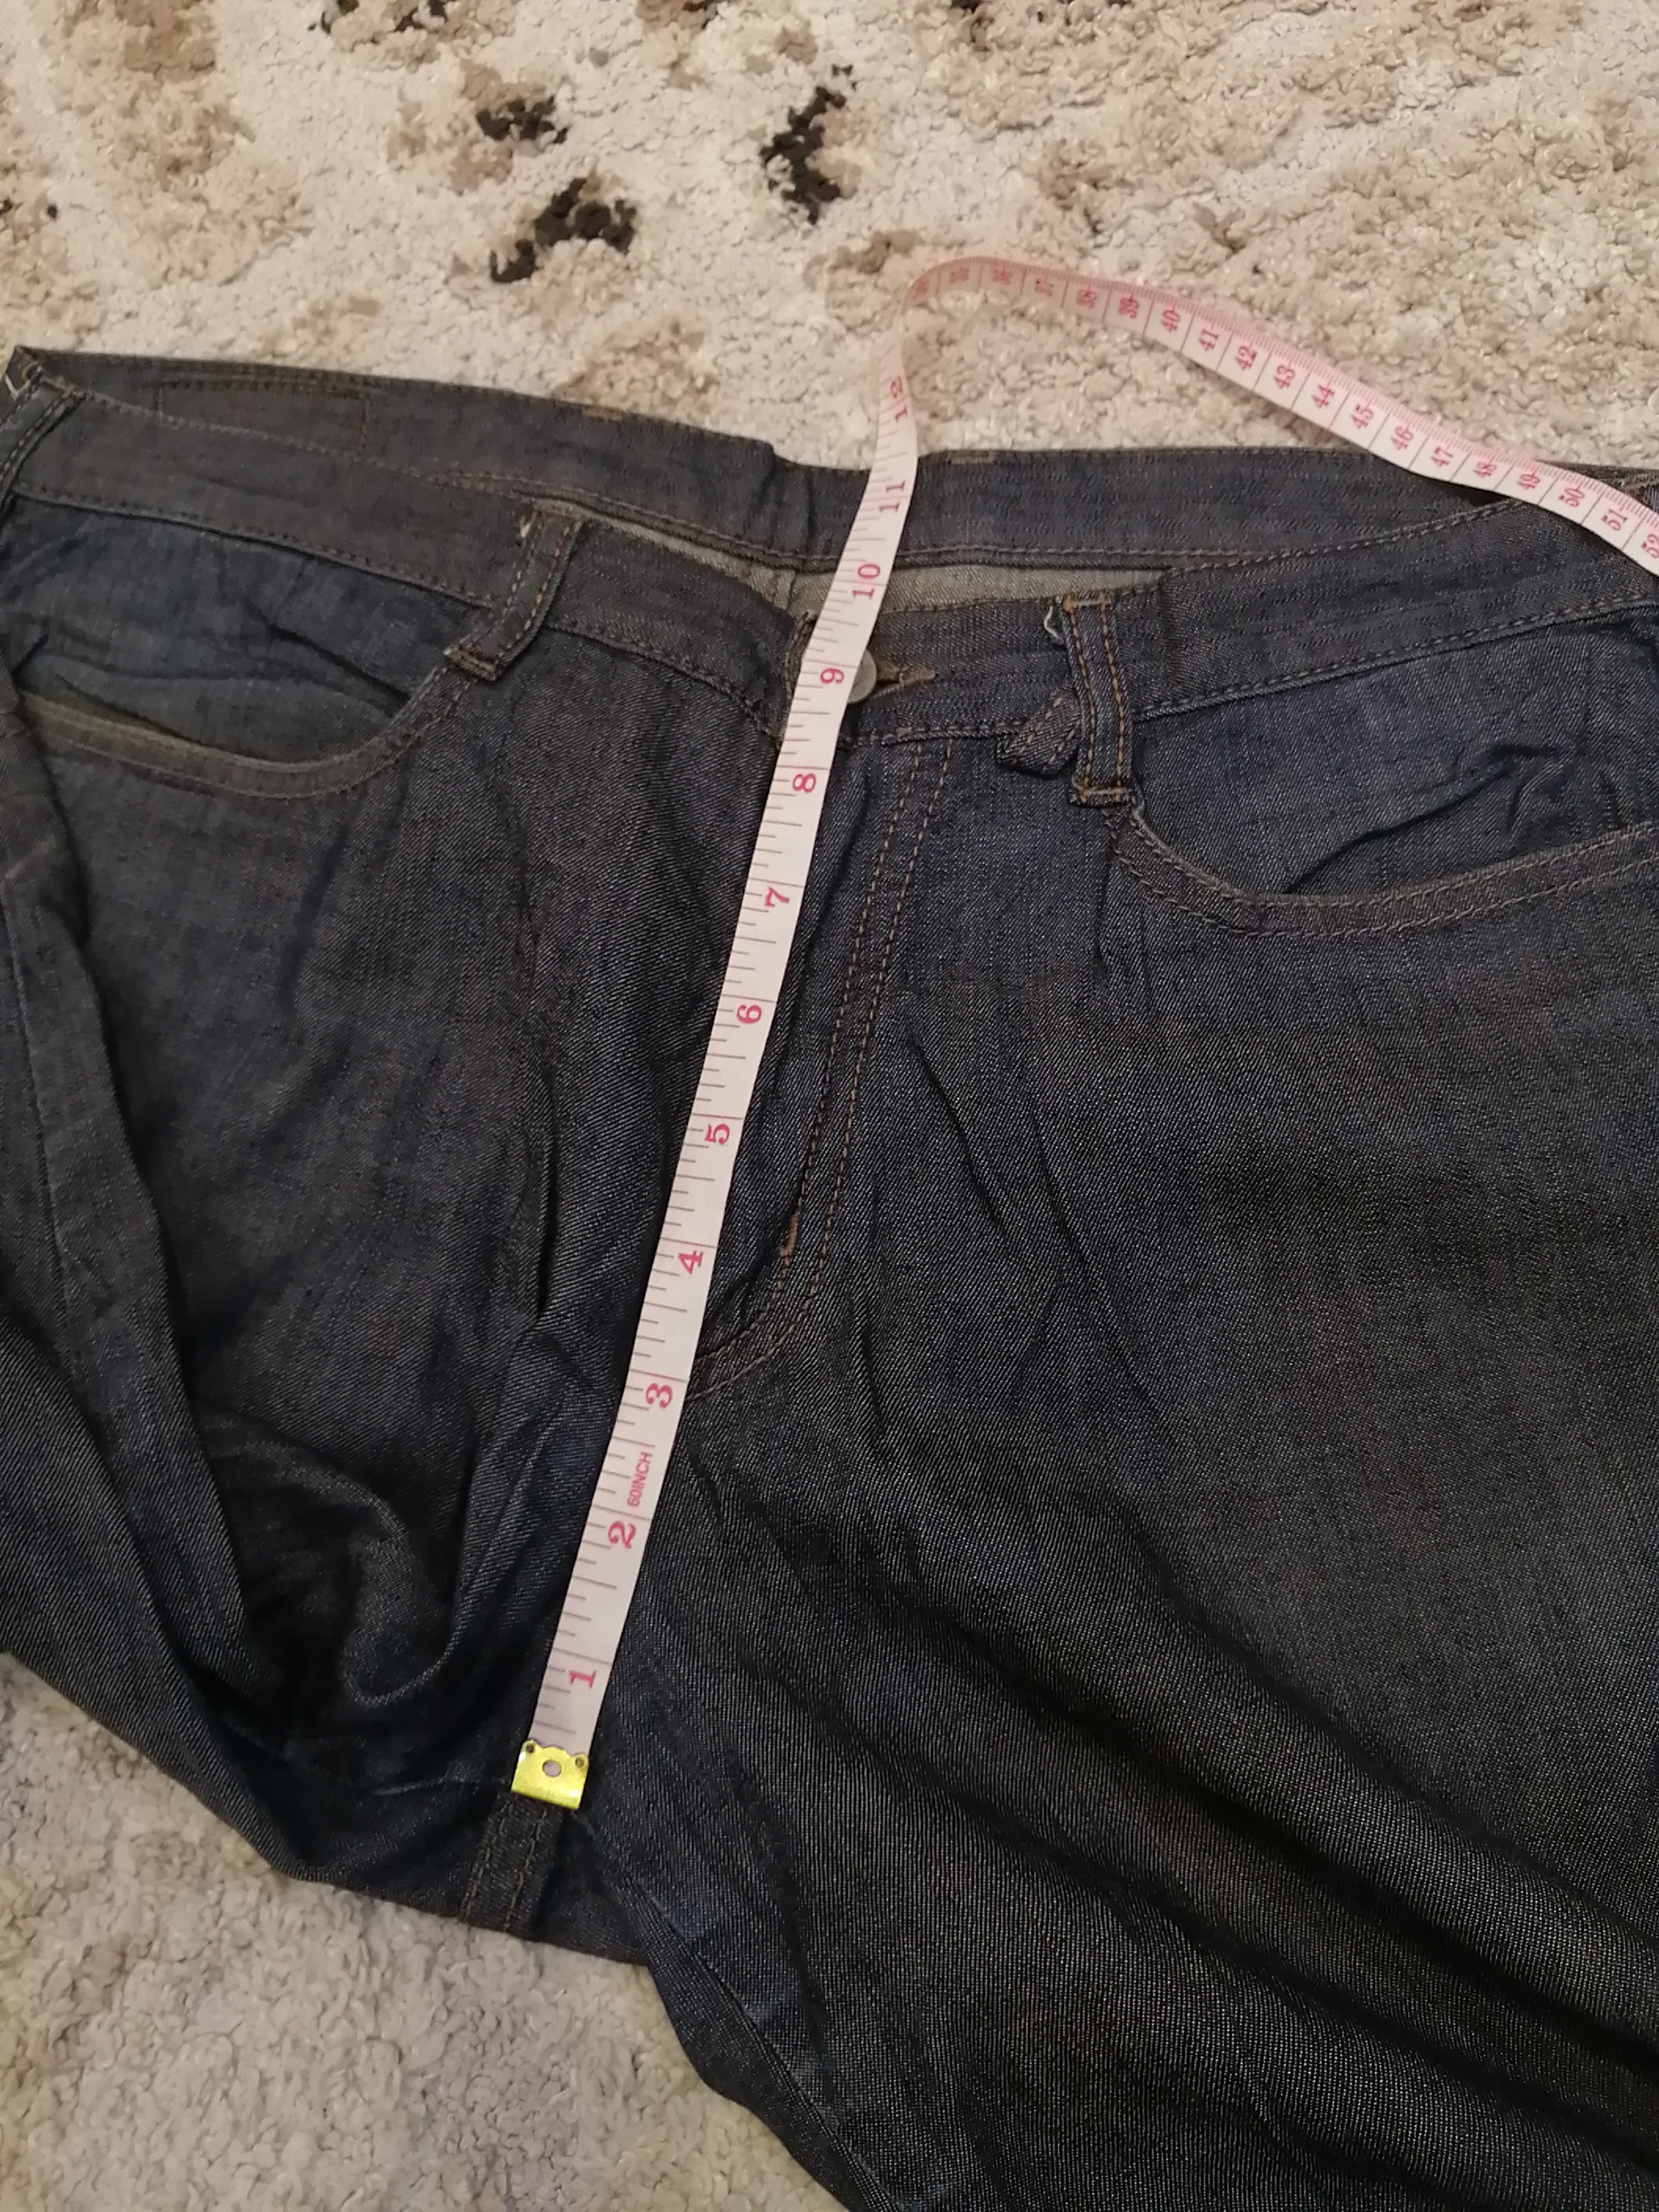 Vintage Neil Barrett Zipper Jeans - 19